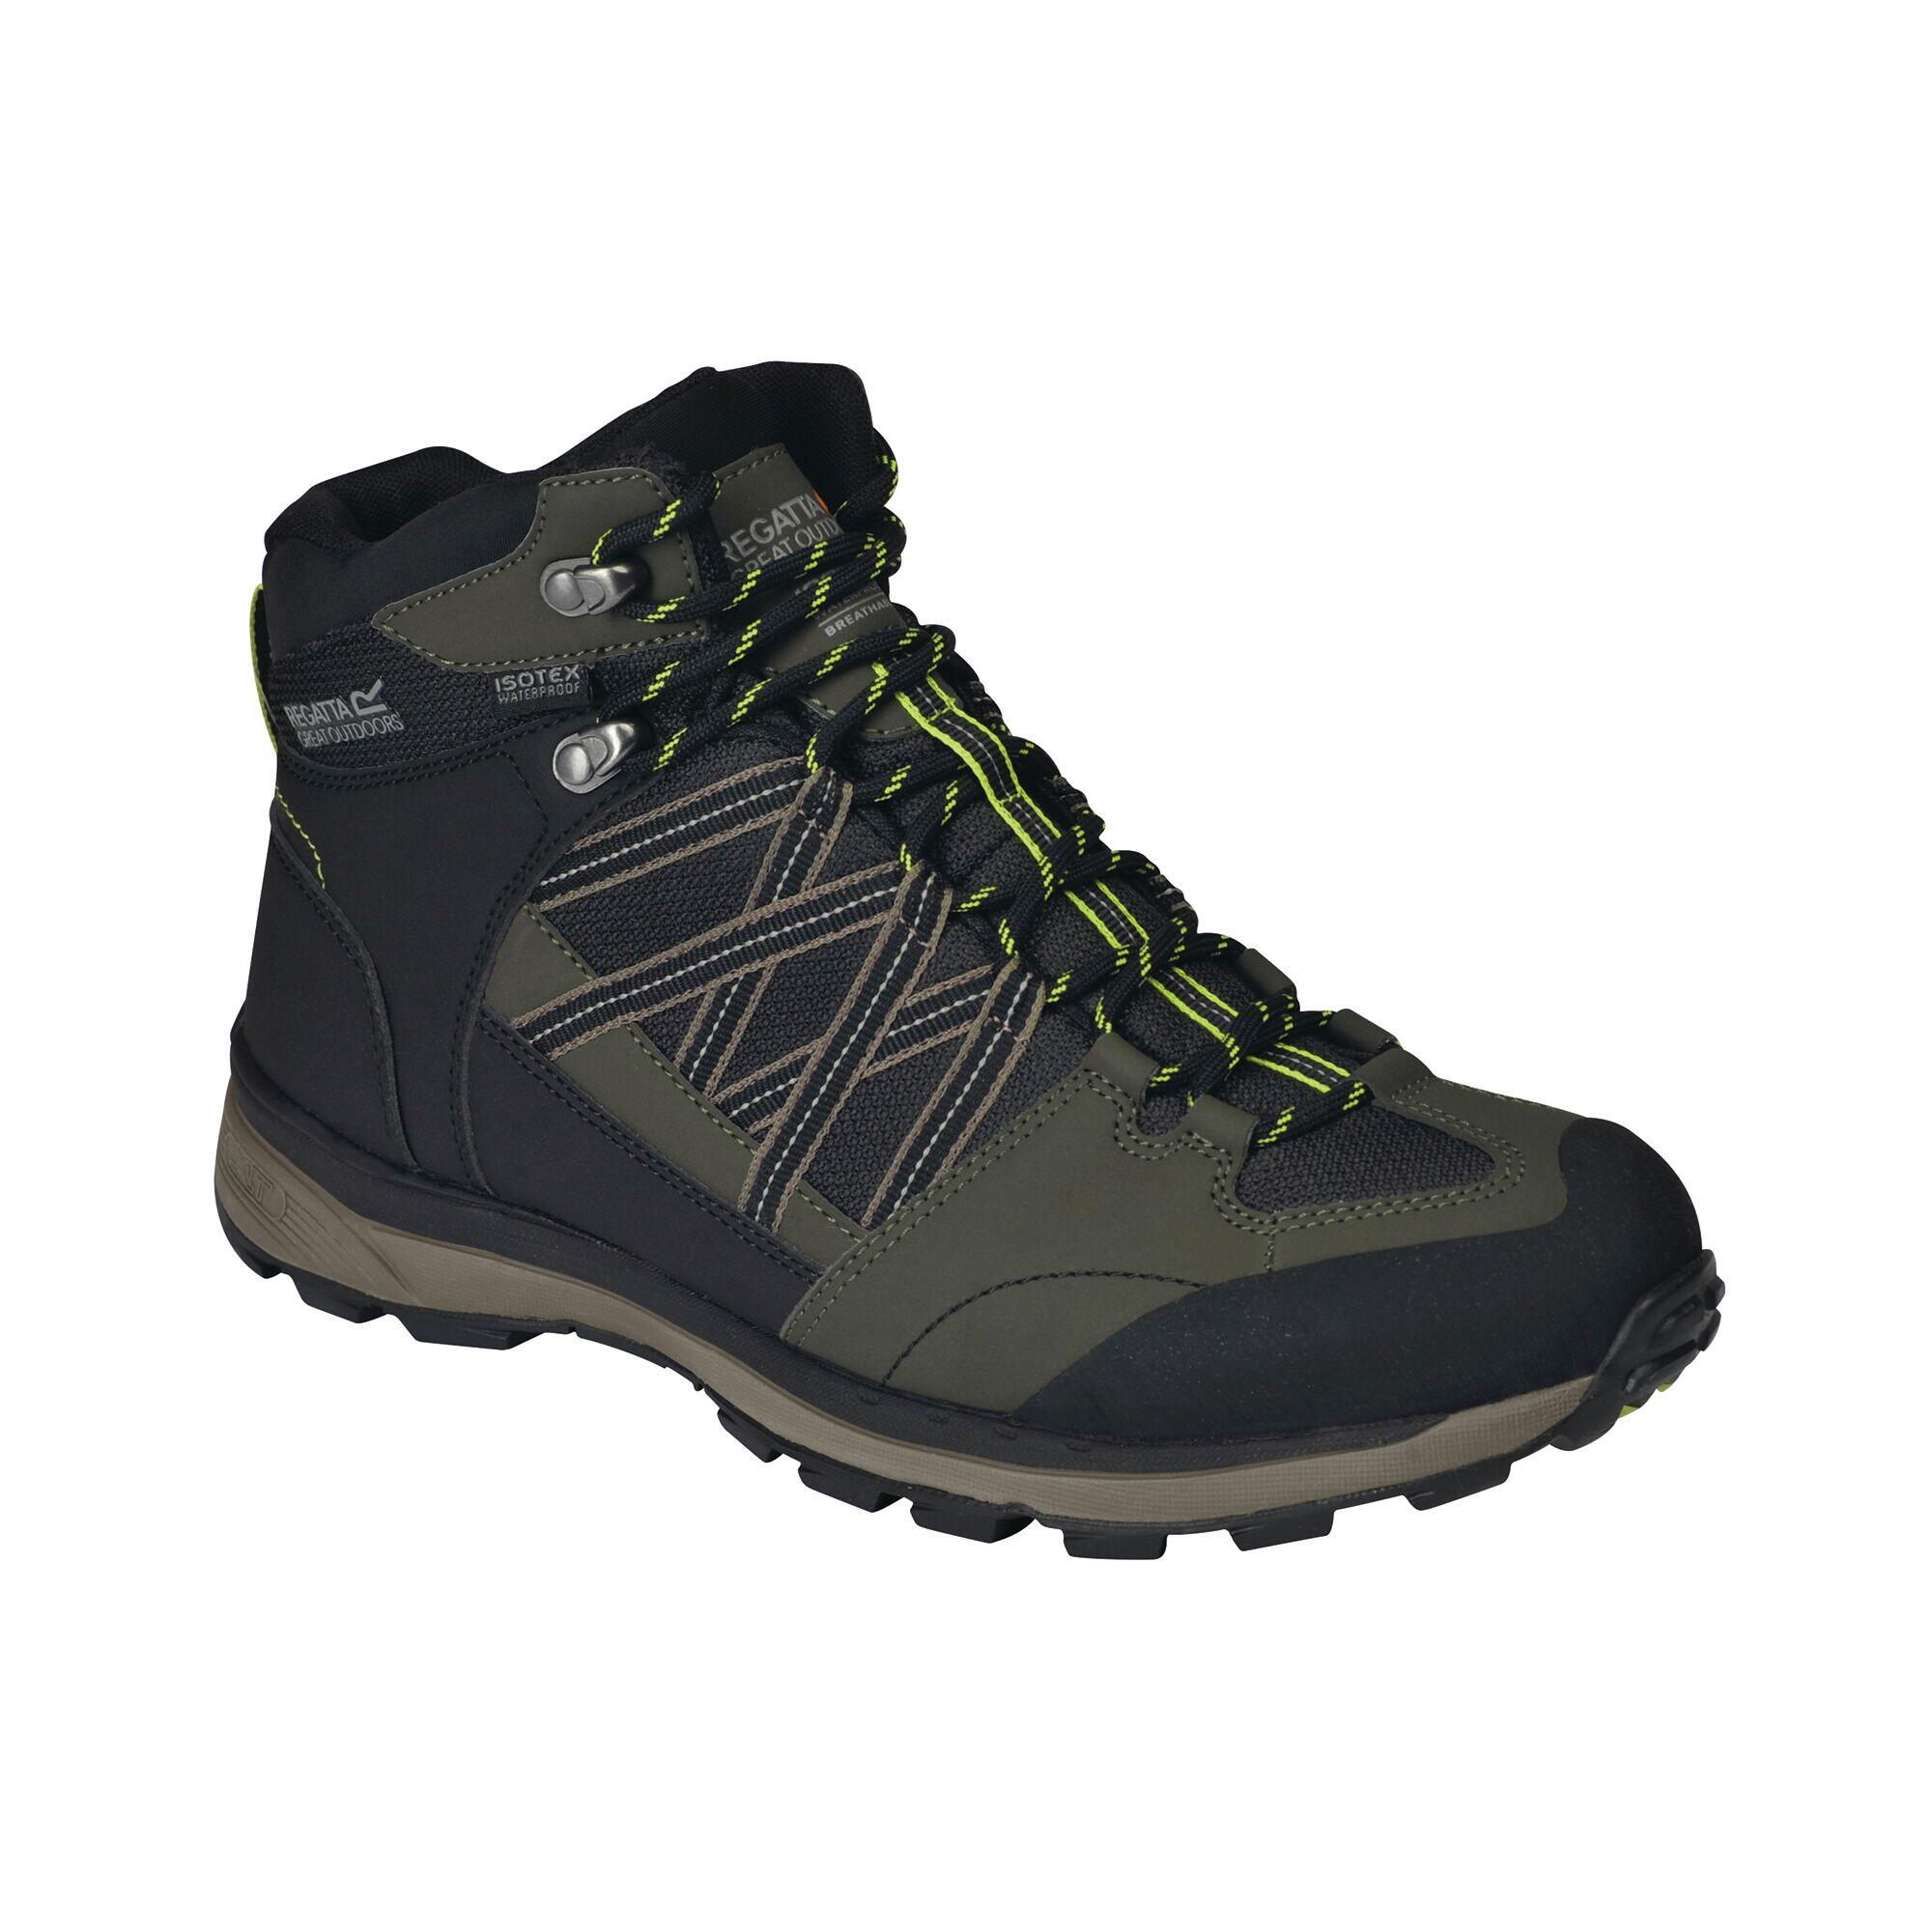 Samaris II Men's Hiking Boots - Dark Khaki/Light Green 1/6